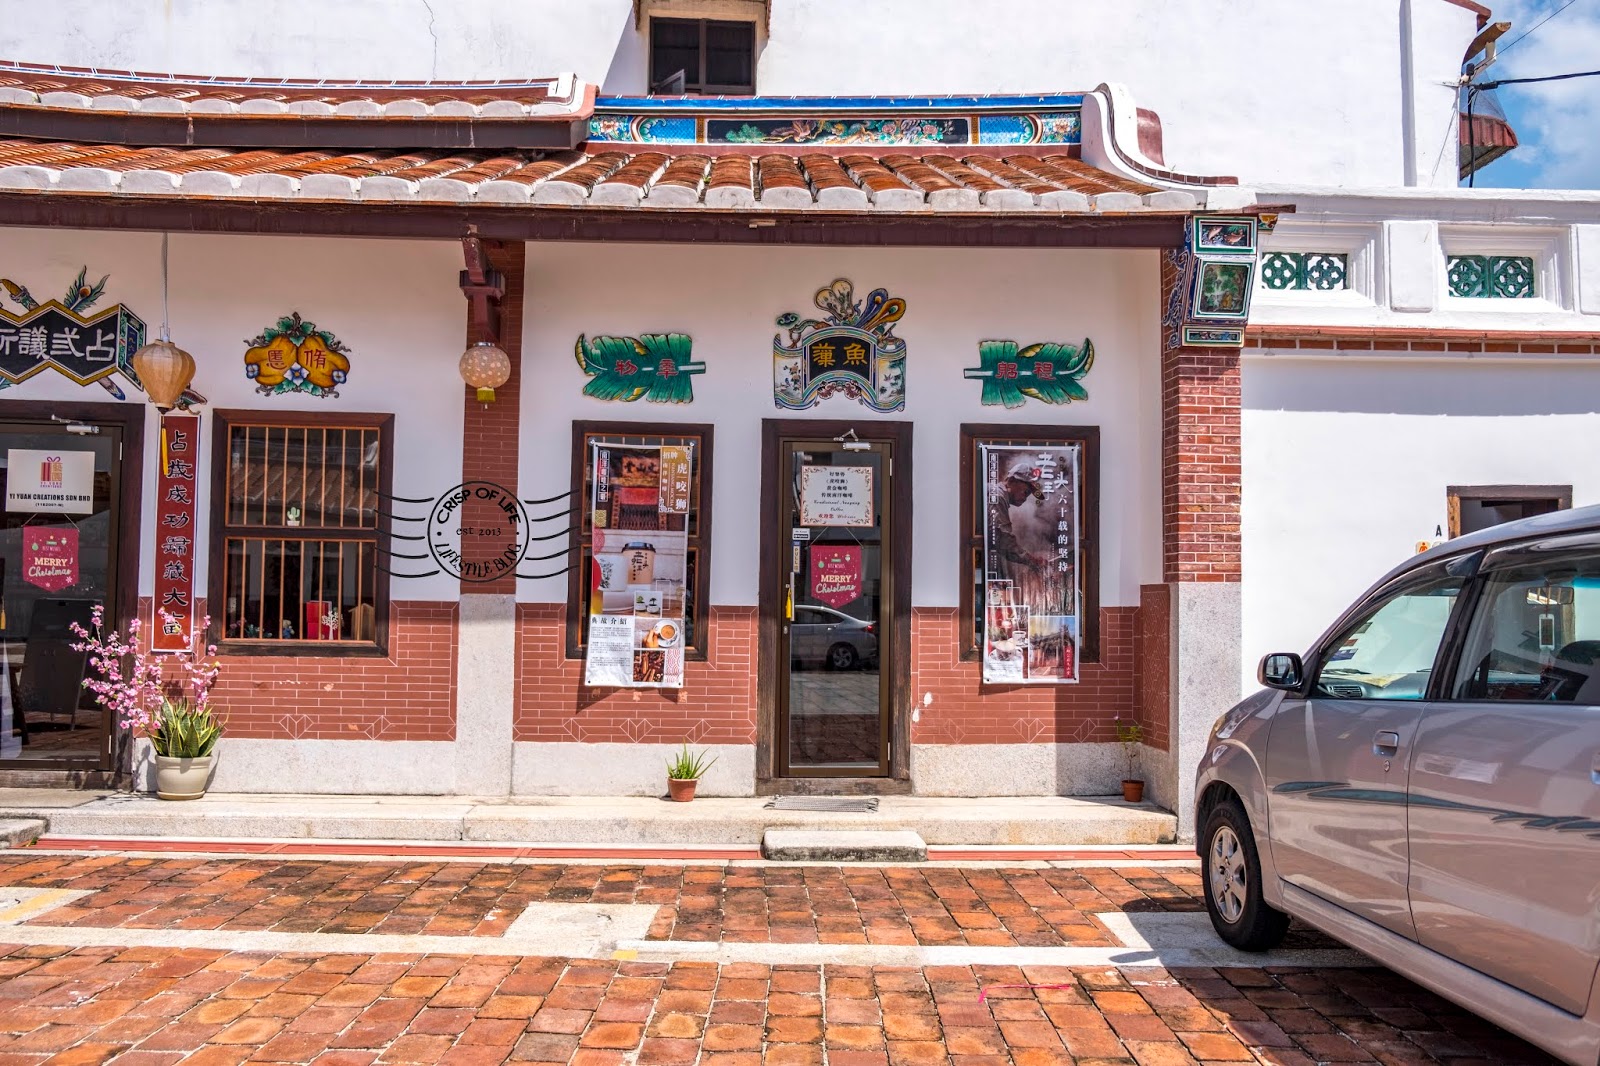 Lao Tao Qiu Old Master Coffee 老头手南洋咖啡馆 at Victoria Street, Georgetown, Penang